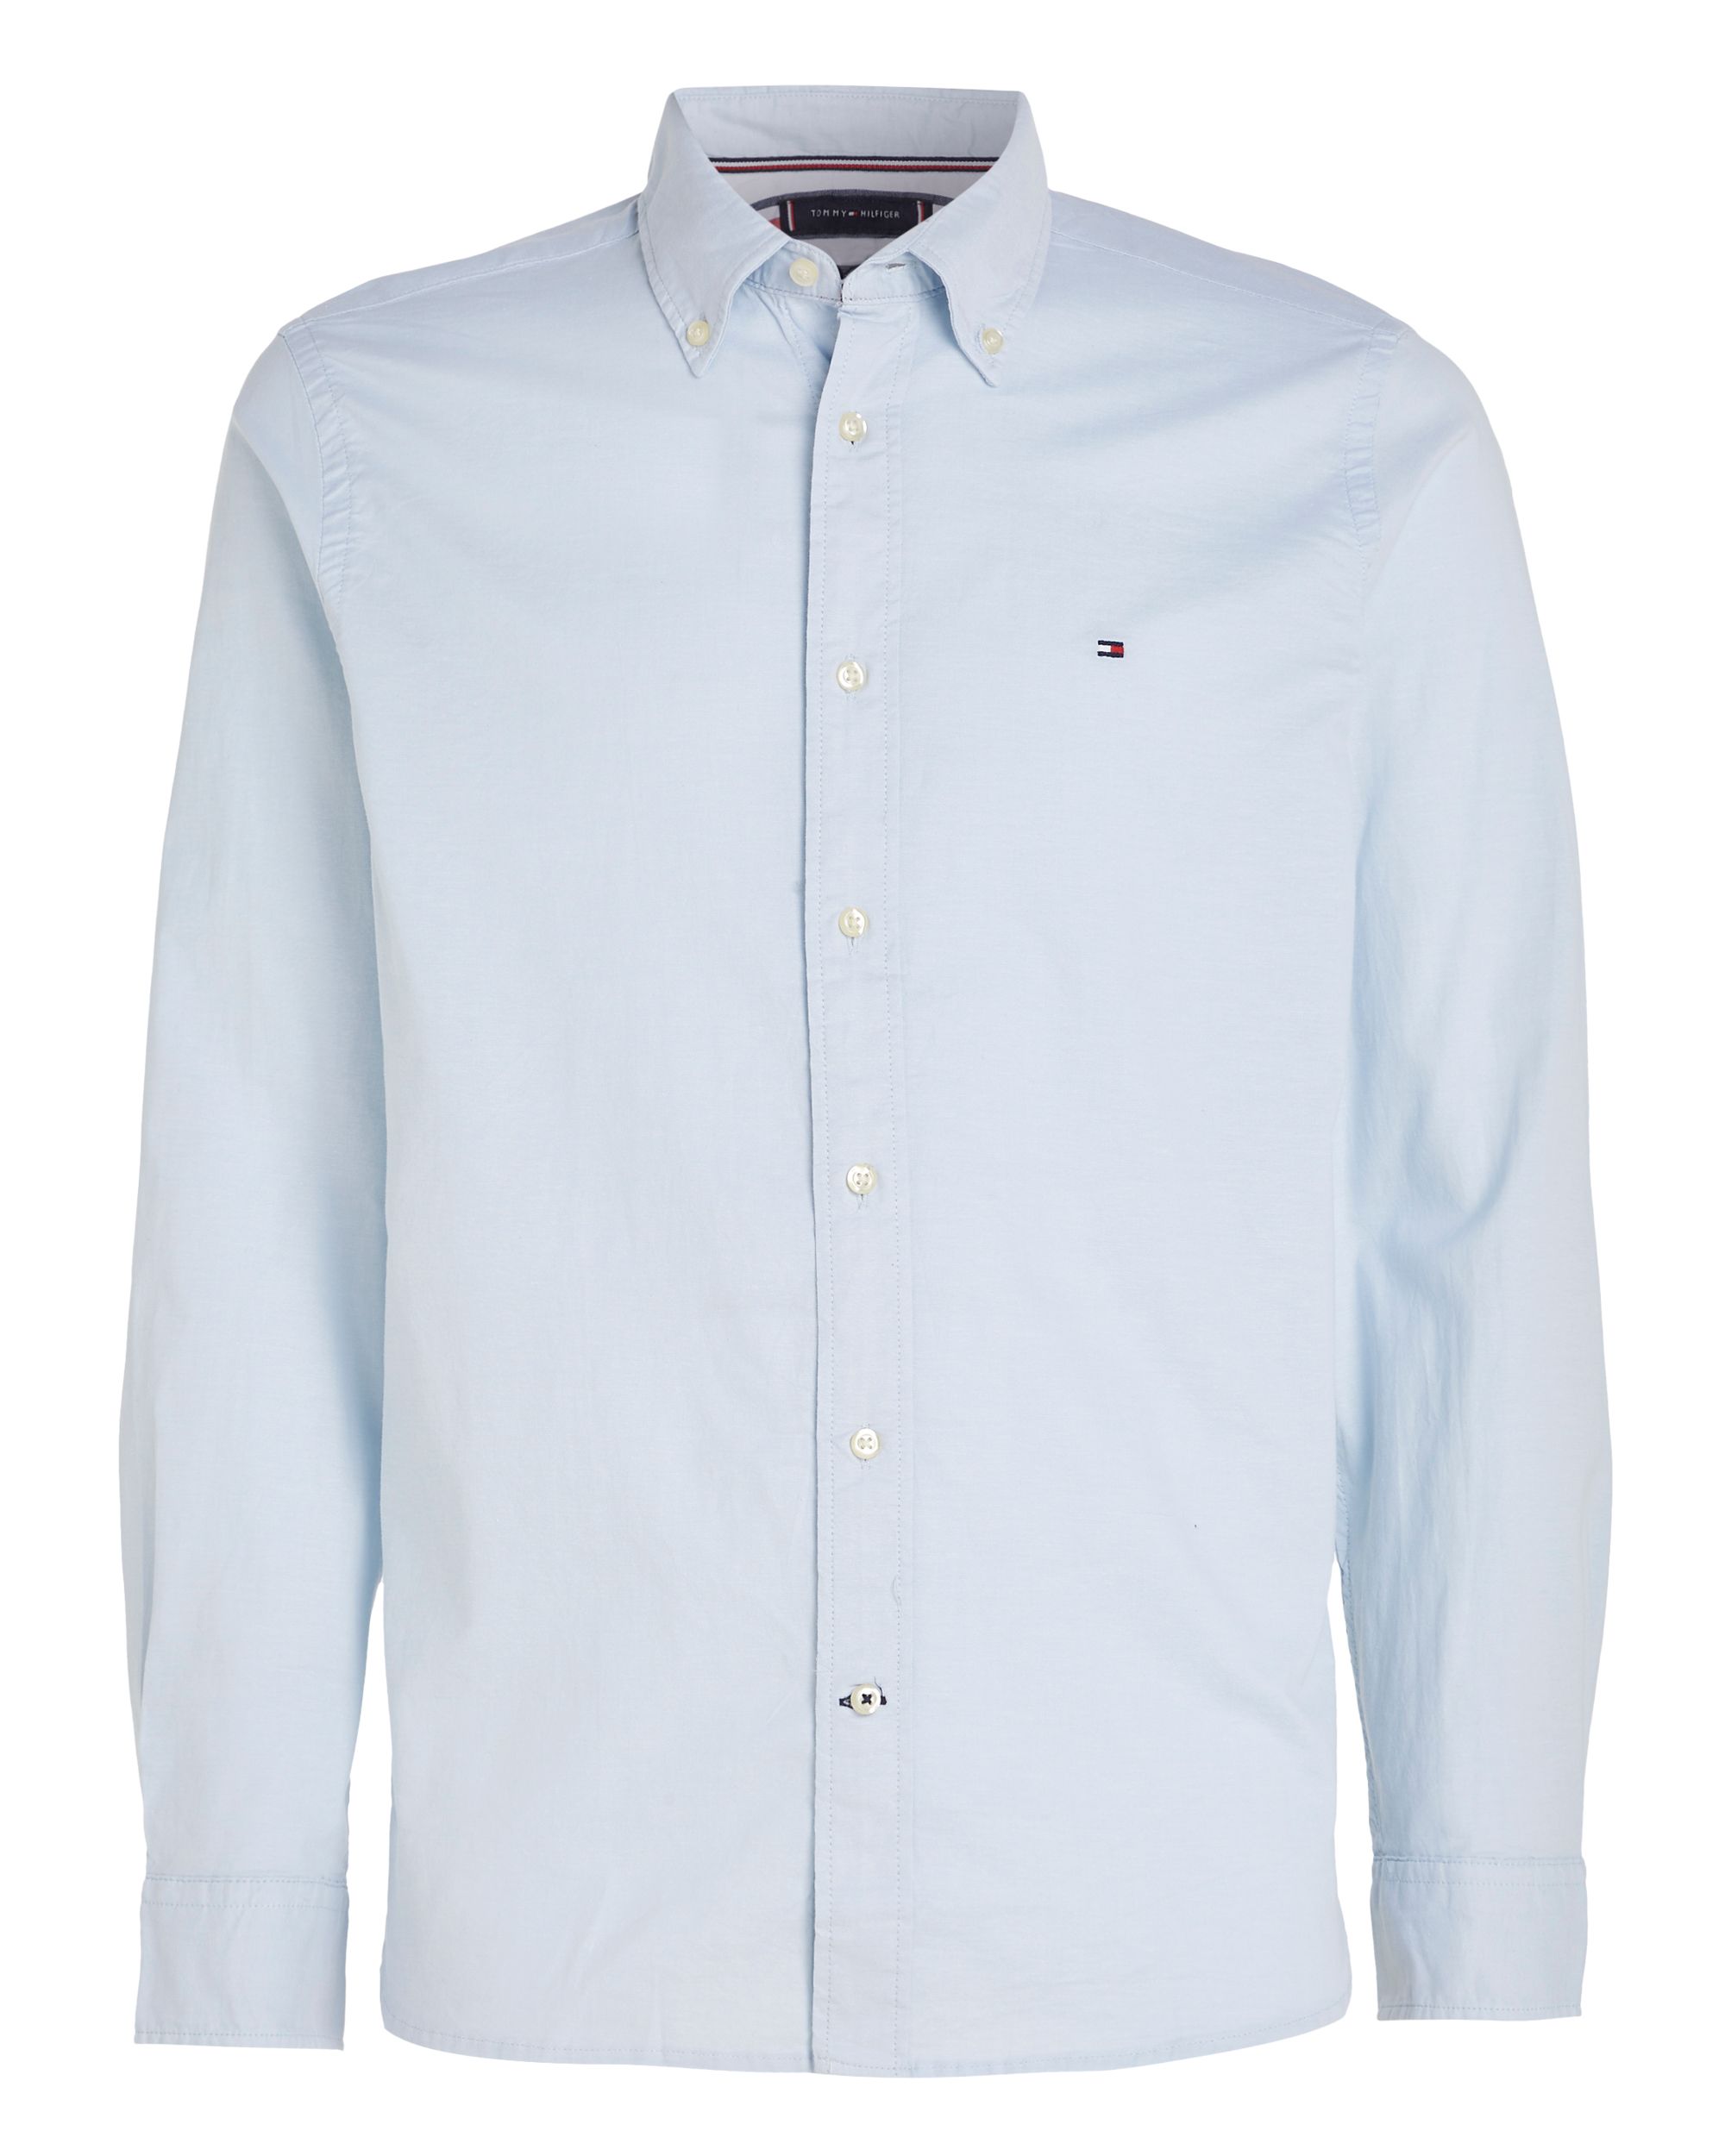 Tommy Hilfiger Menswear Casual Overhemd LM Blauw 092597-001-L